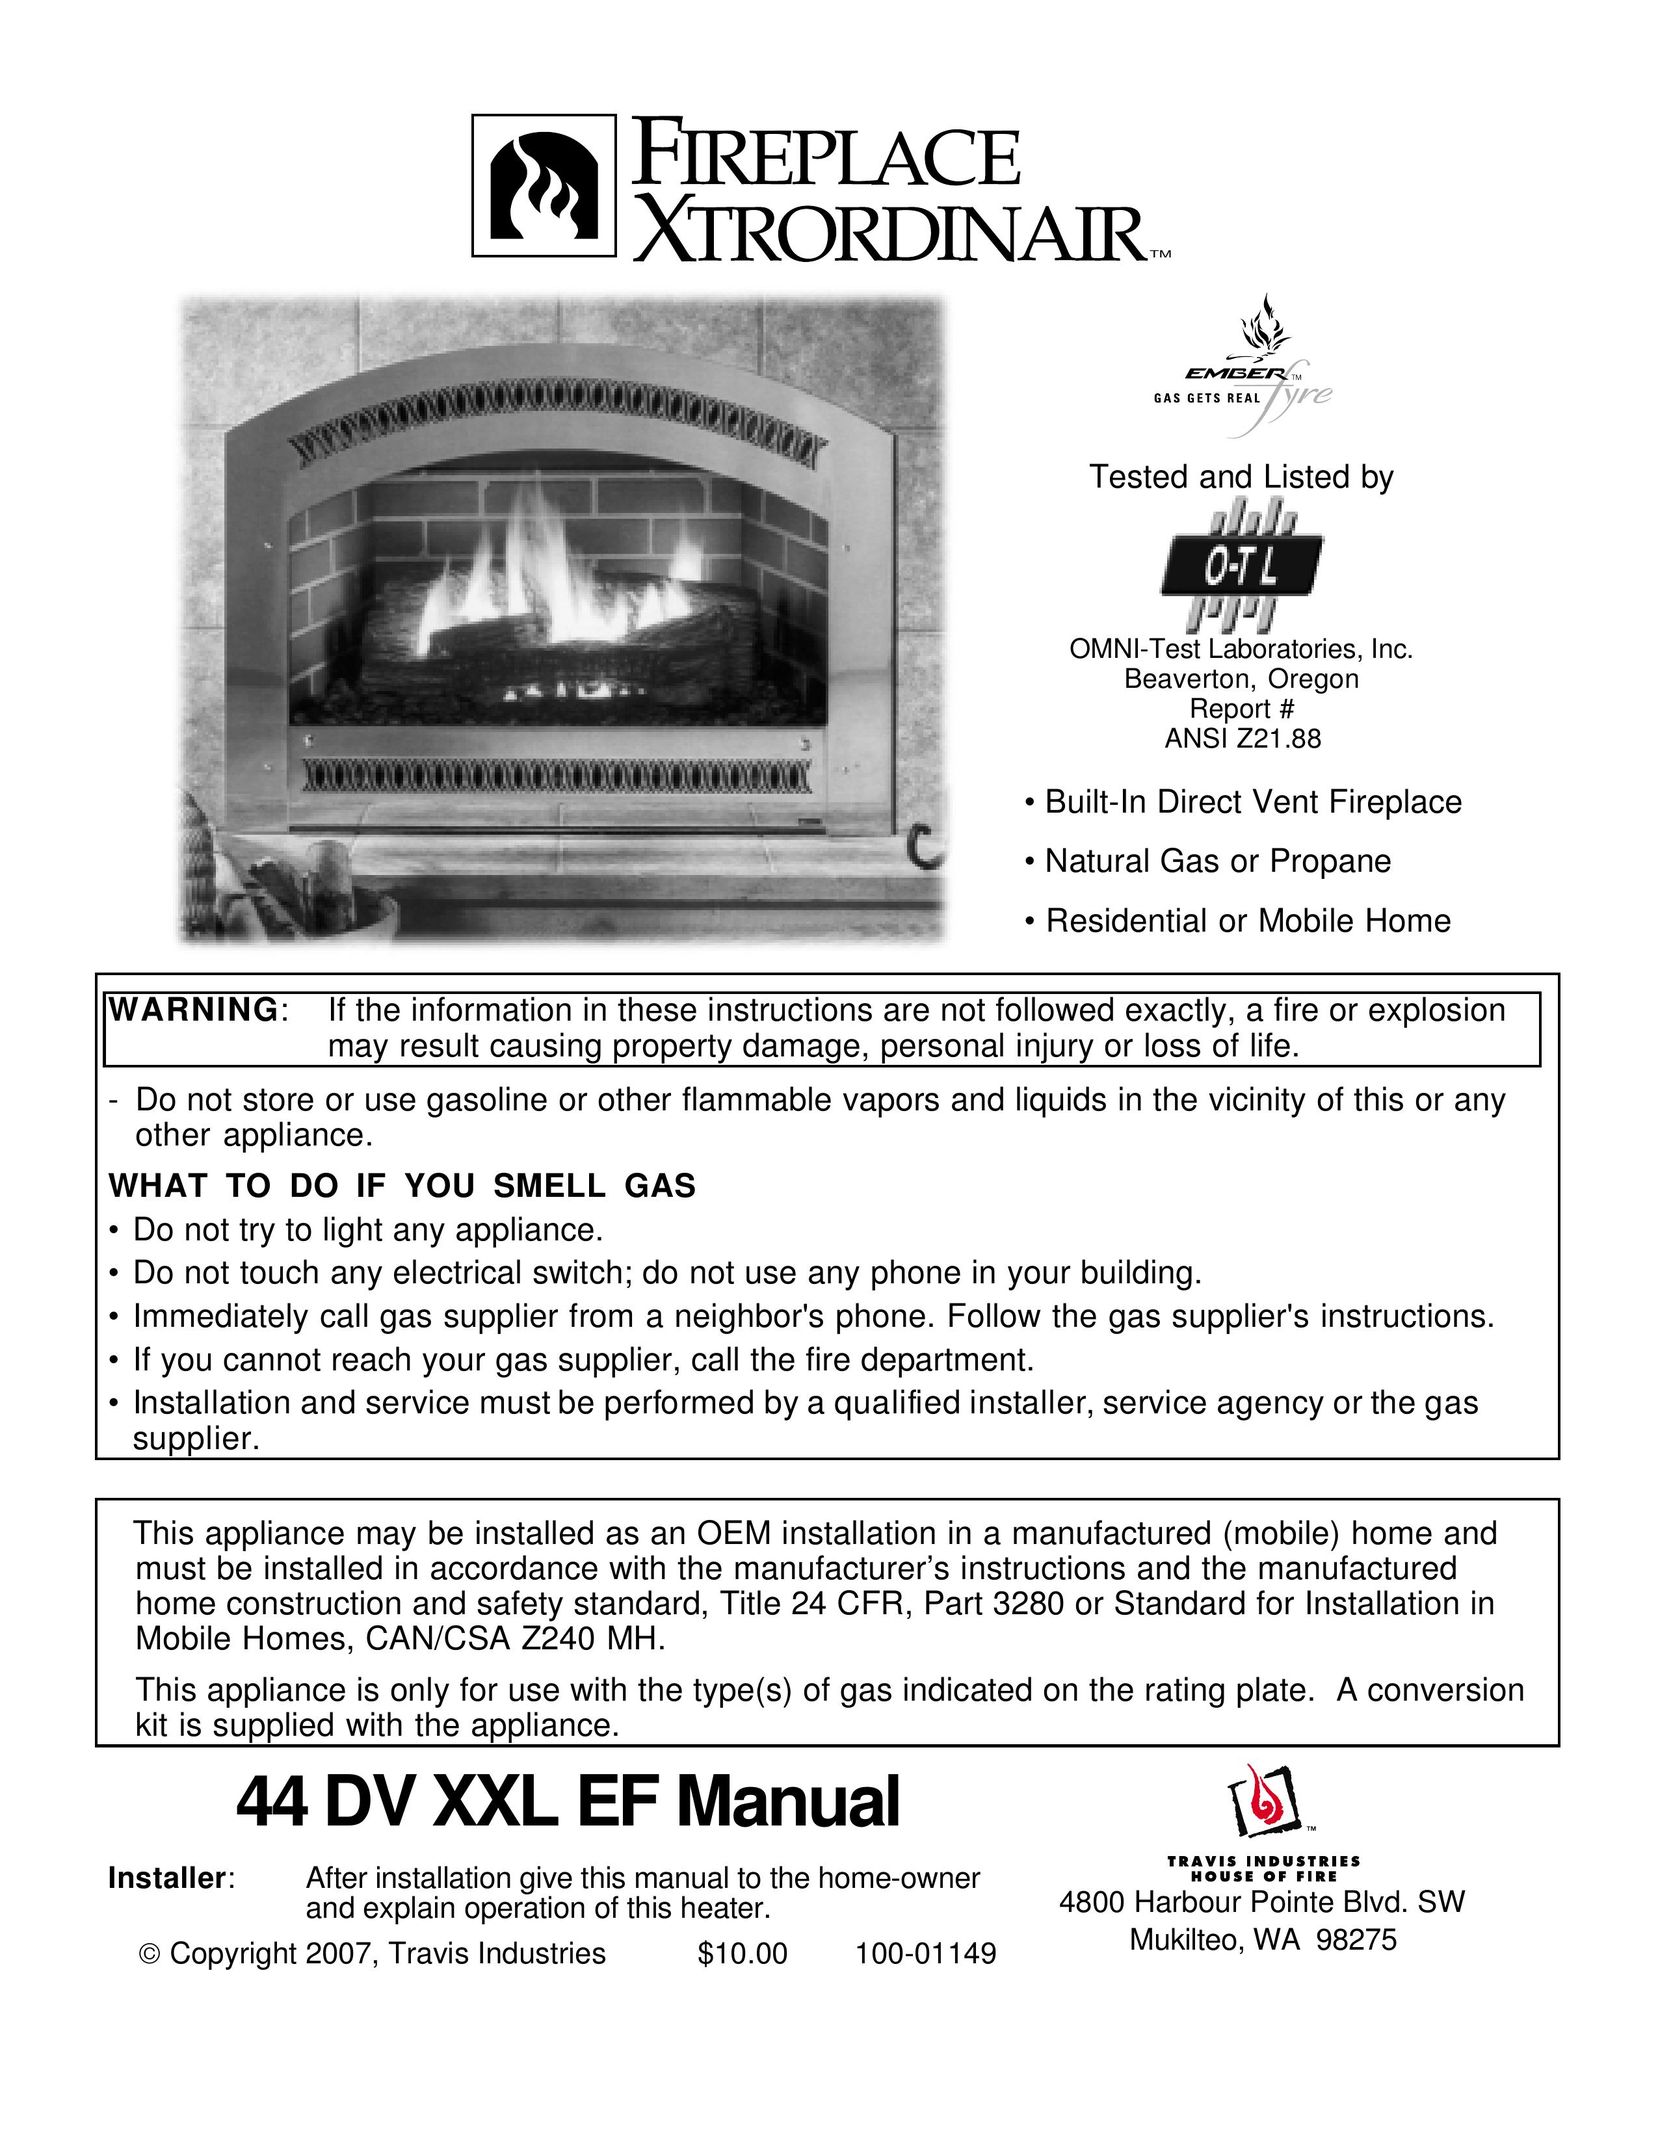 FireplaceXtrordinair 44 DV XXL EF Indoor Fireplace User Manual